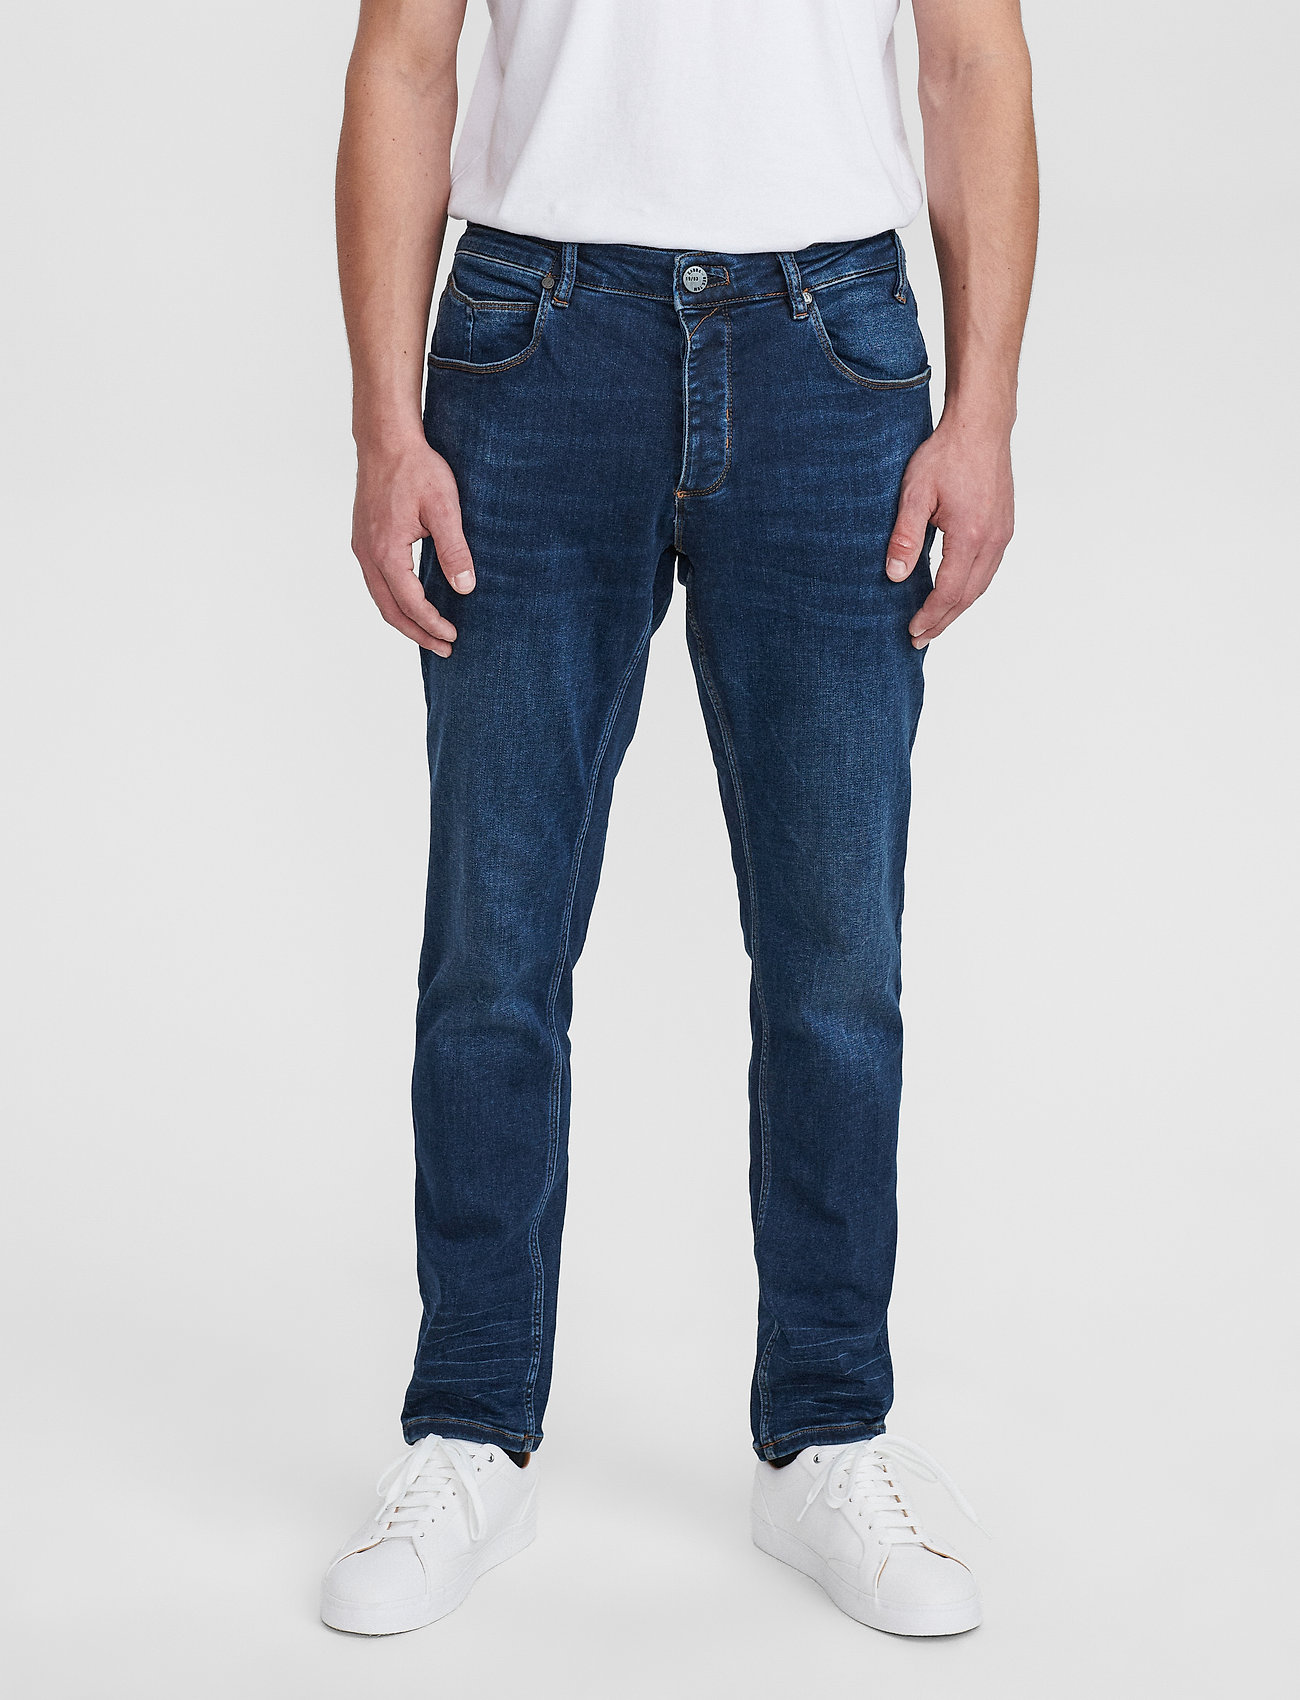 stuk journalist restjes Gabba Rey K3606 Mid Blue Jeans - Slim jeans - Boozt.com